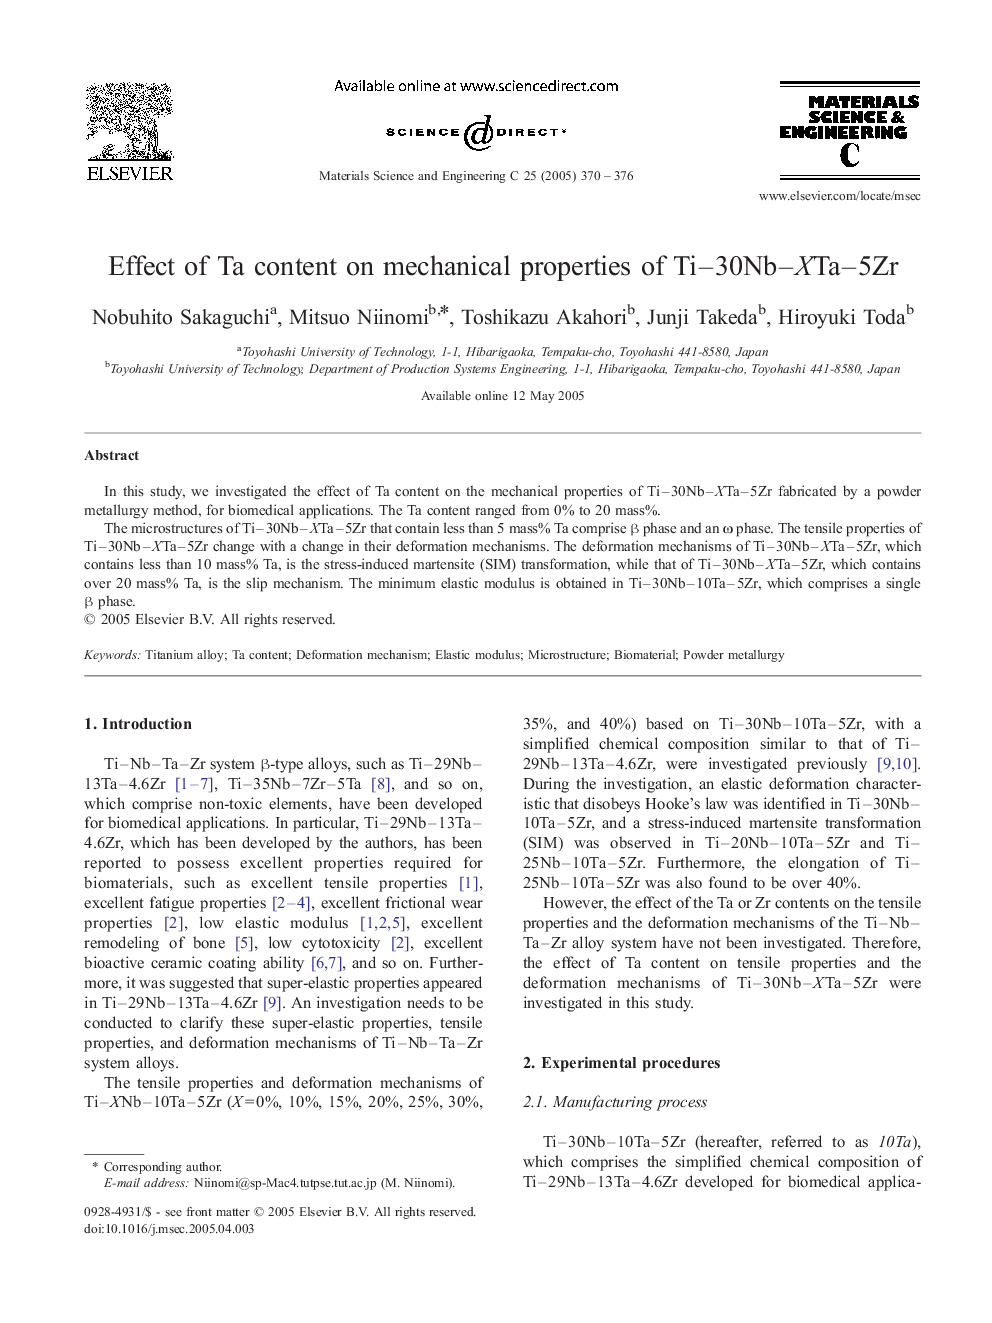 Effect of Ta content on mechanical properties of Ti-30Nb-XTa-5Zr